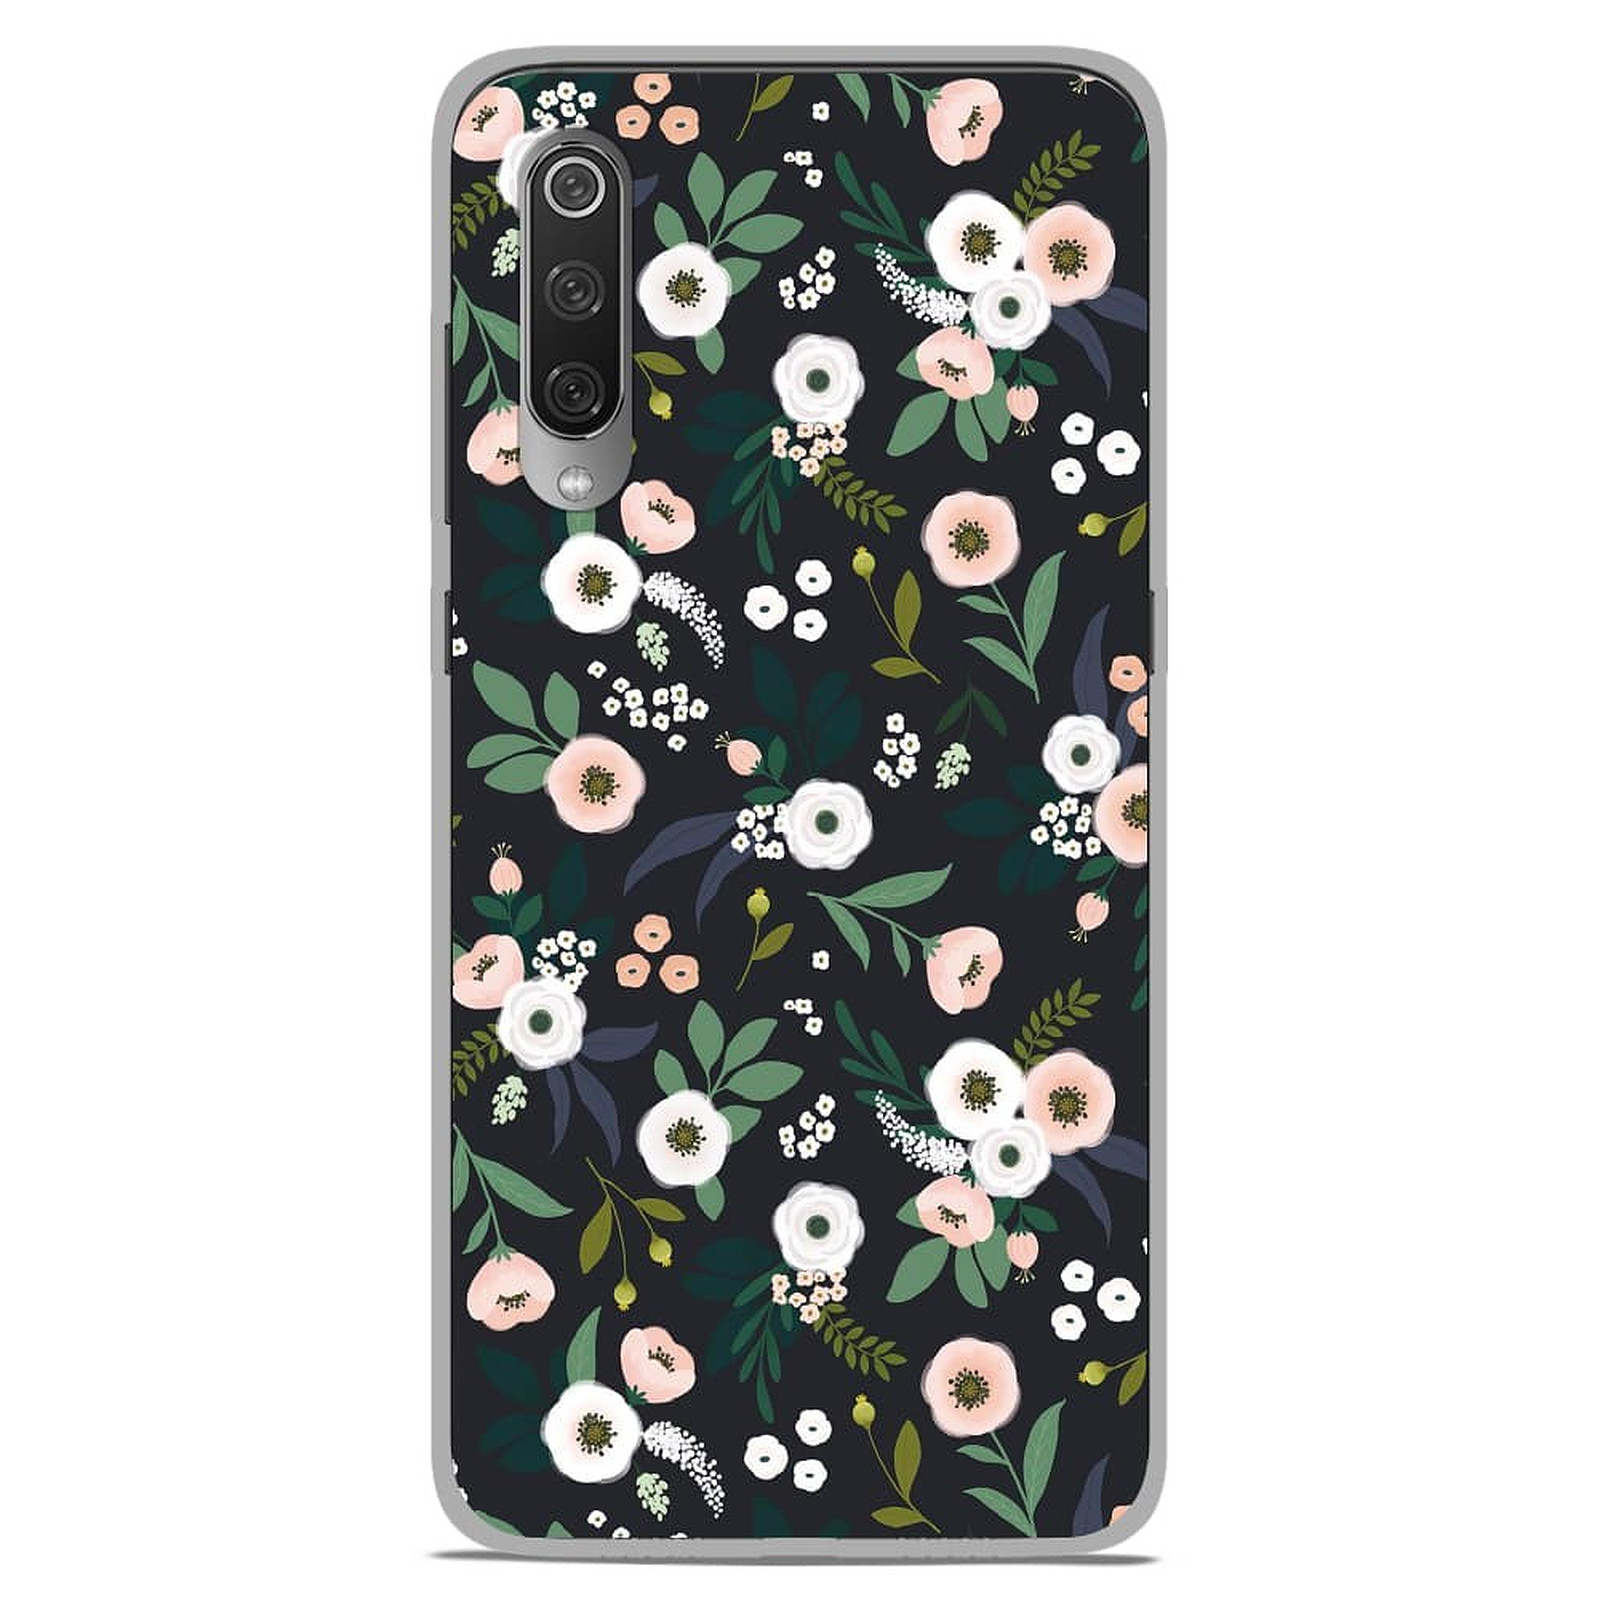 1001 Coques Coque silicone gel Xiaomi Mi 9 / Mi 9 Pro motif Flowers Noir - Coque telephone 1001Coques